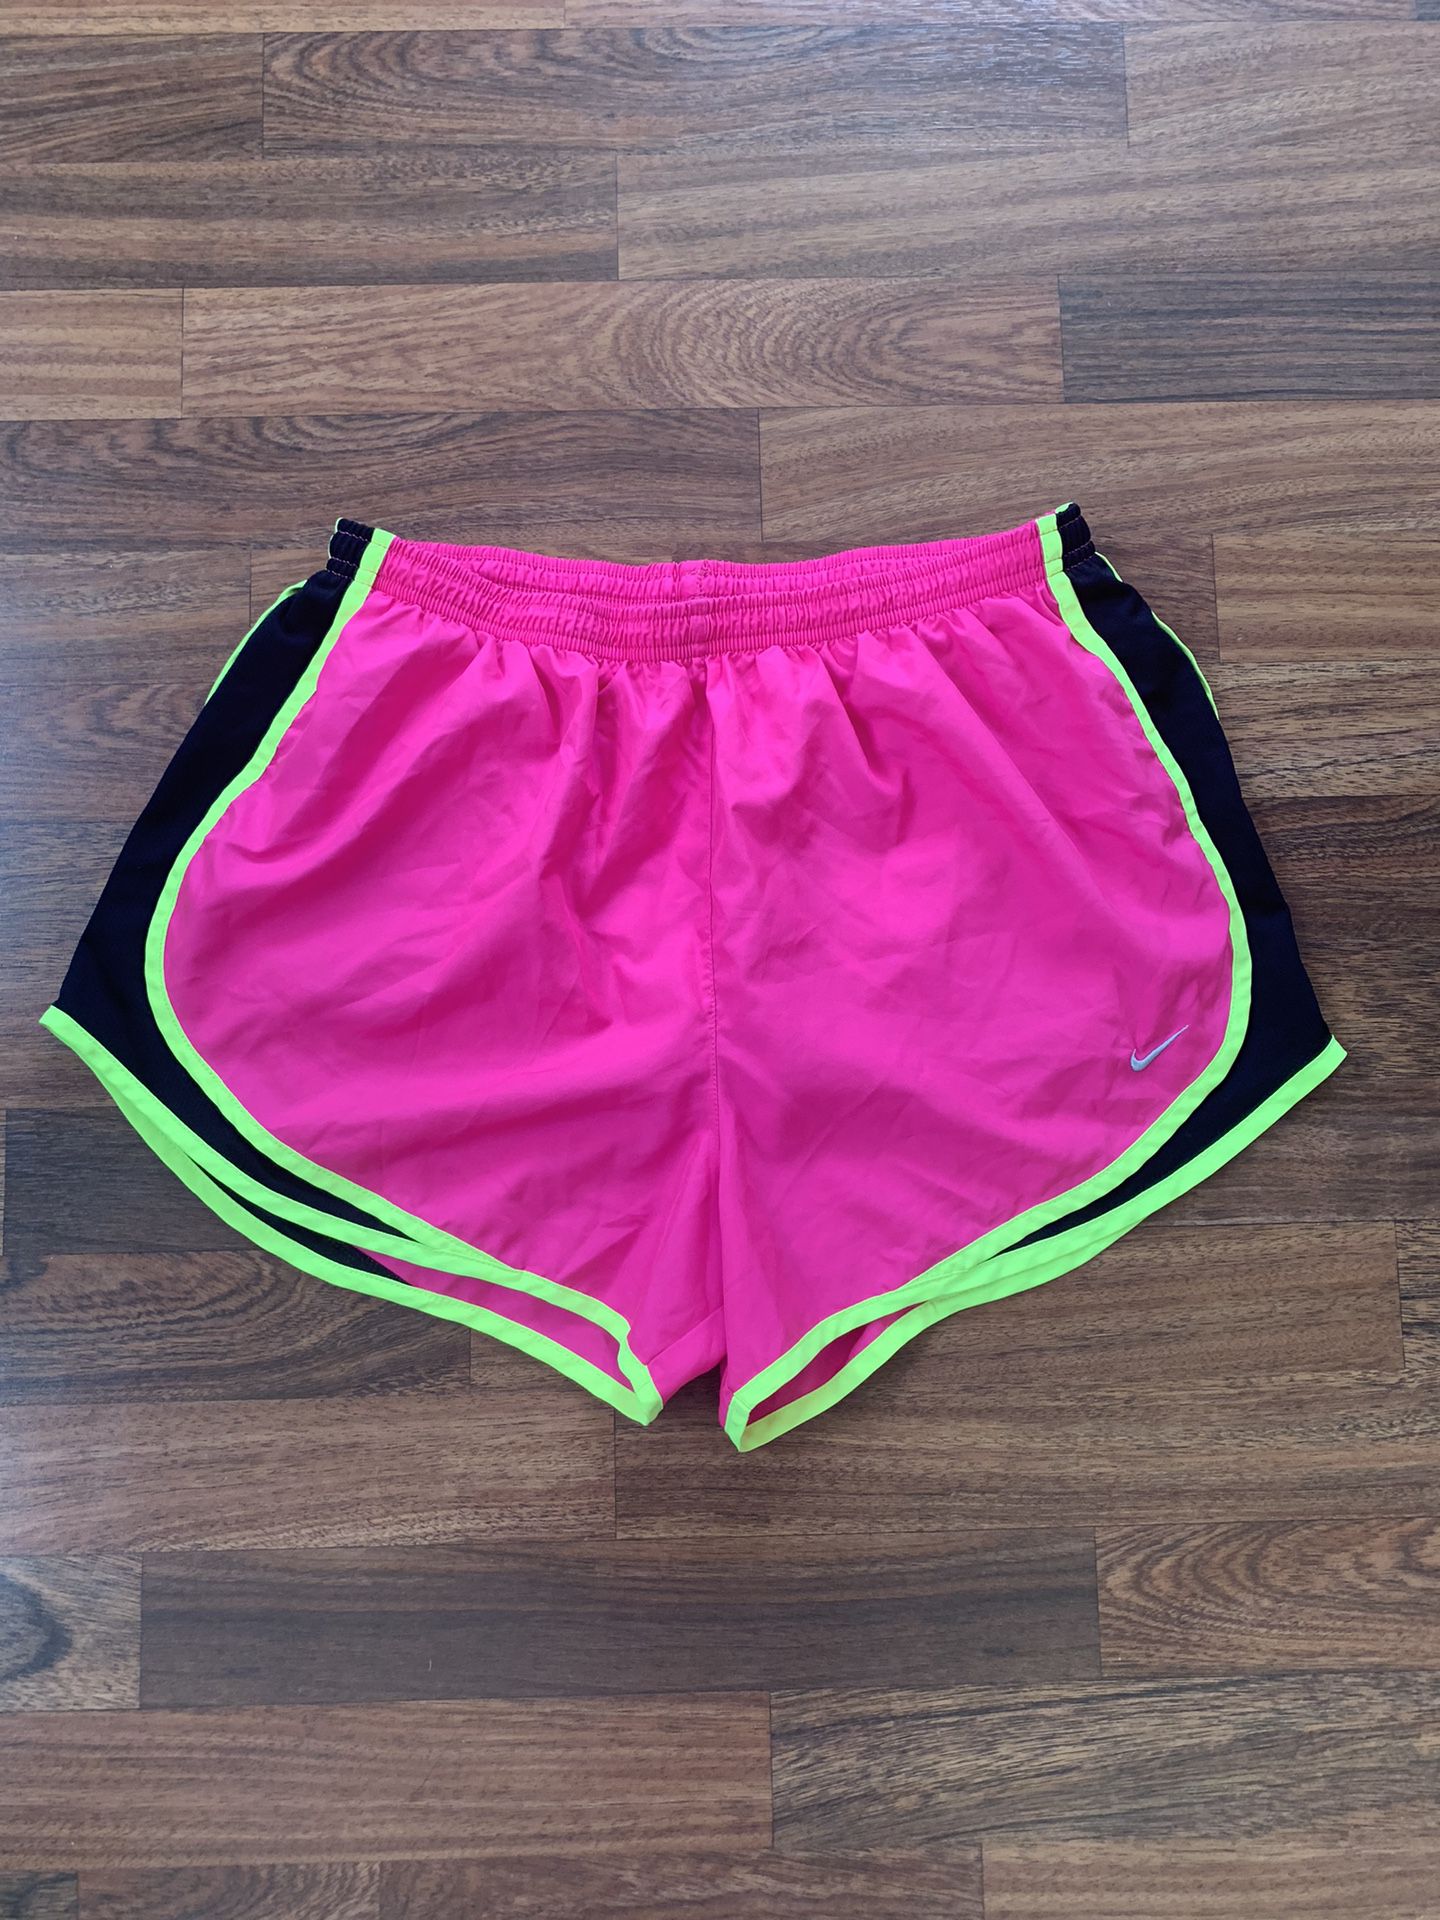 Women's Nike Dri-FIT Pink Yellow Black Lined Shorts Swoosh Size Large 